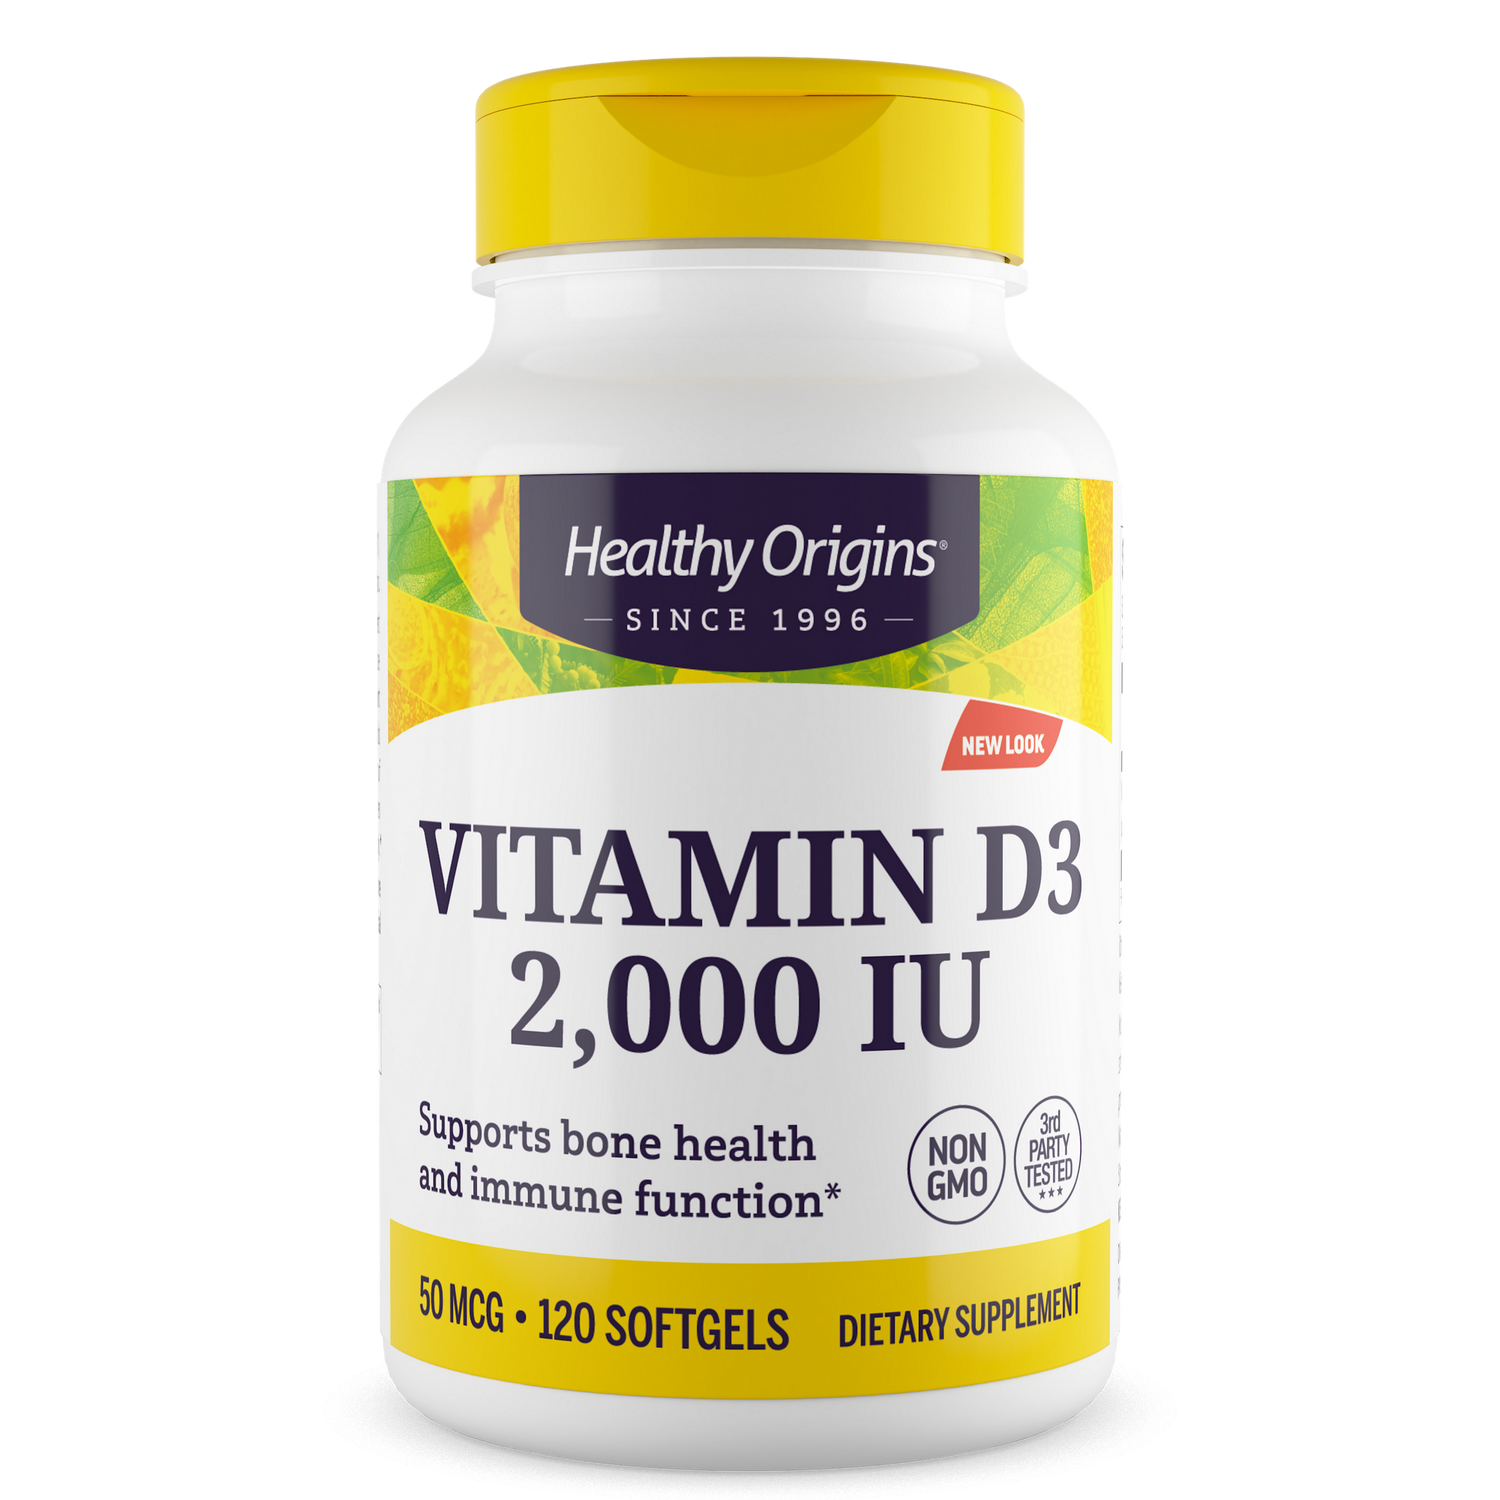 Vitamin Dз 2,000 IU